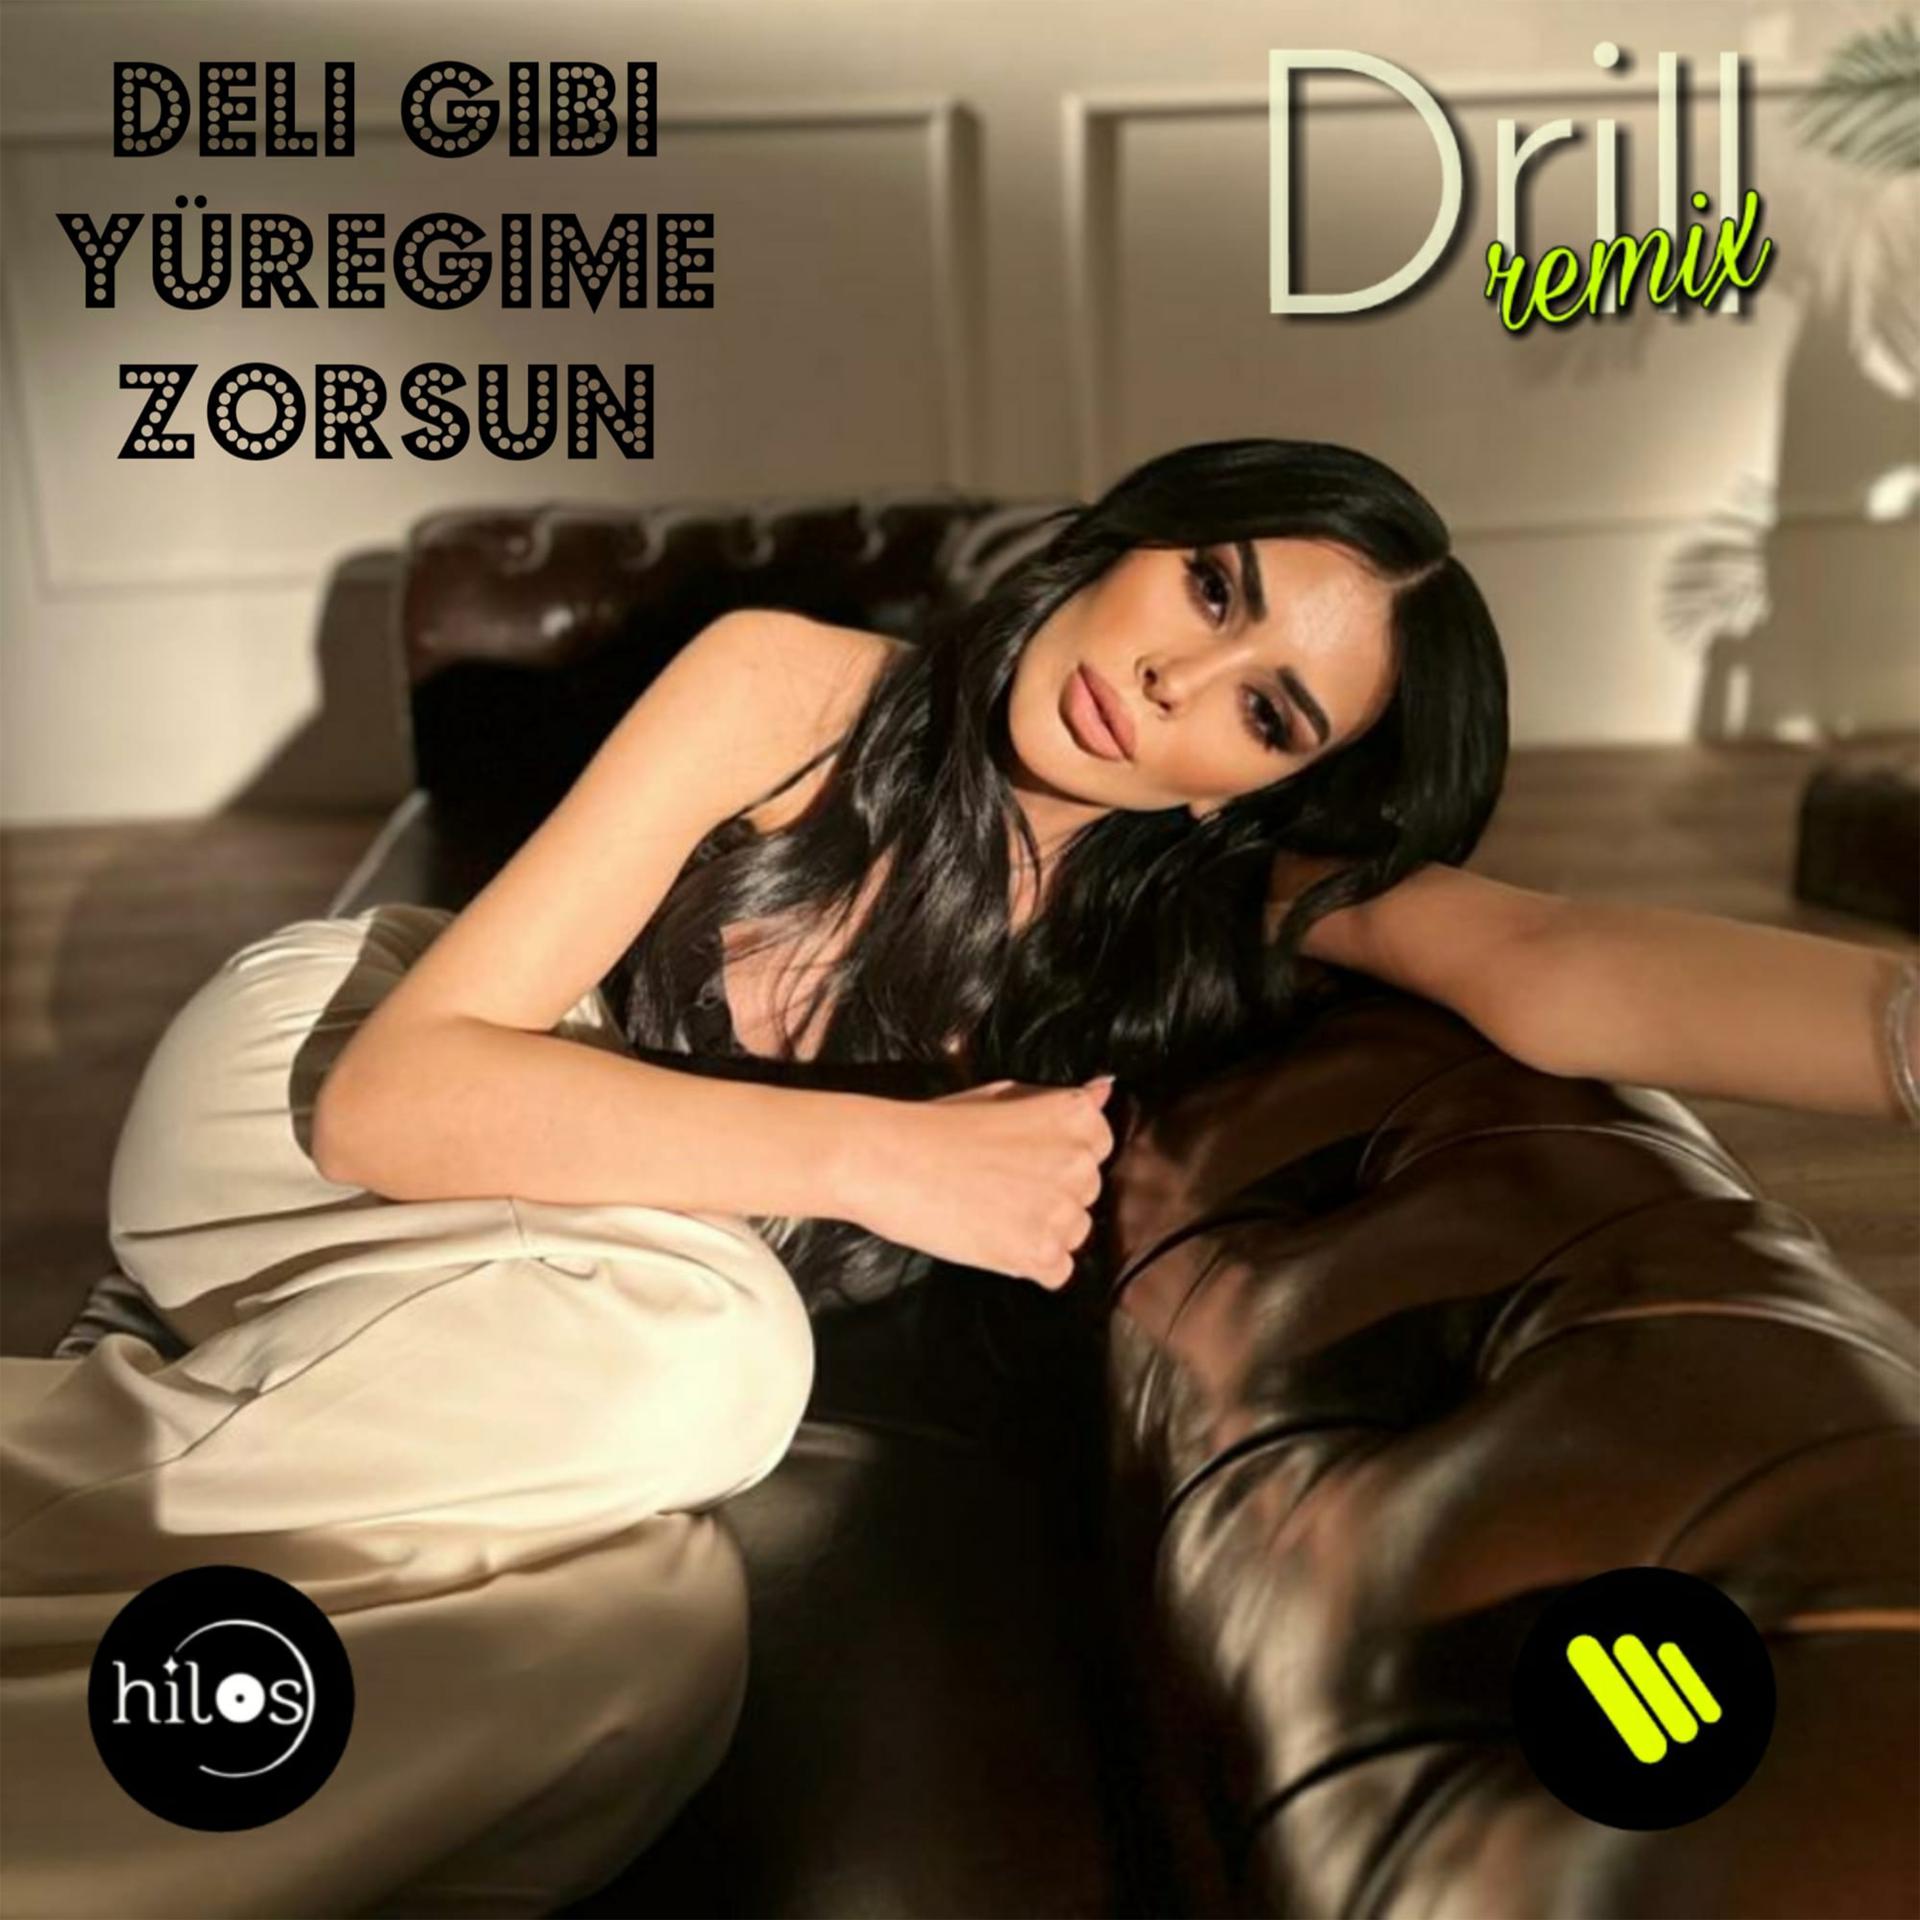 Постер альбома Deli Gibi Yüreğime Zorsun